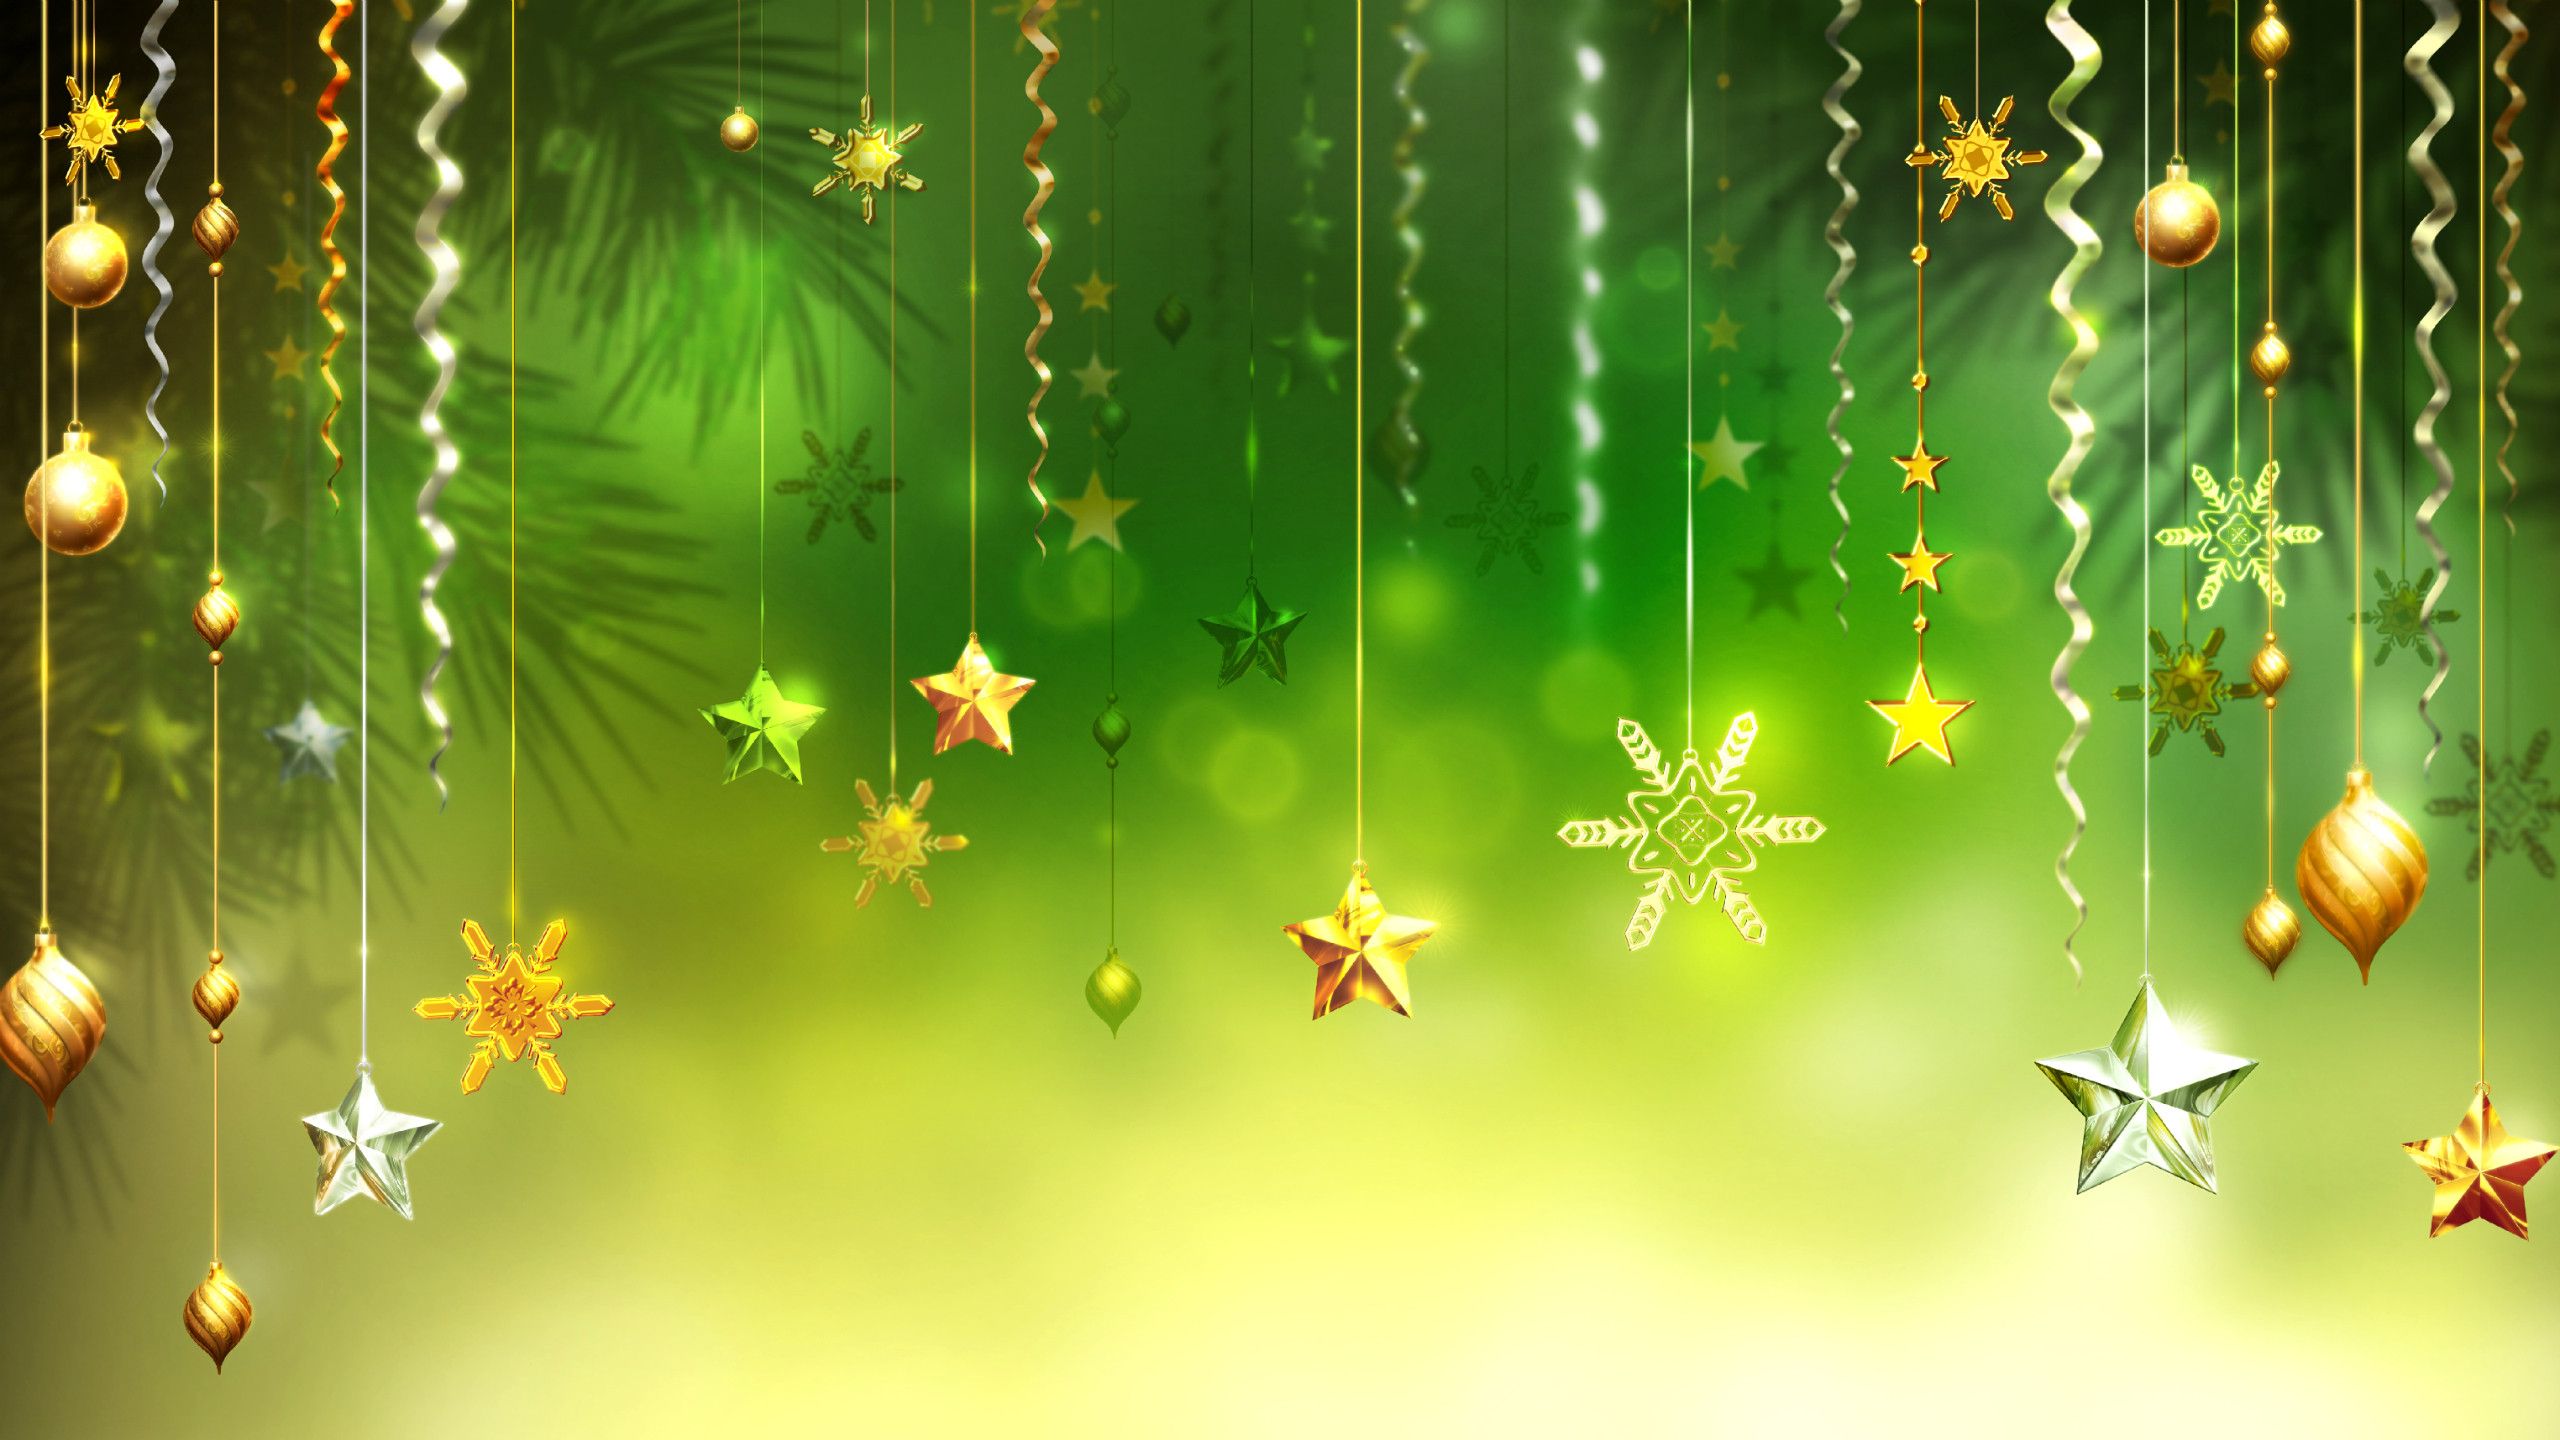 2015 Christmas Image background - desktop, wallpapers, images ...